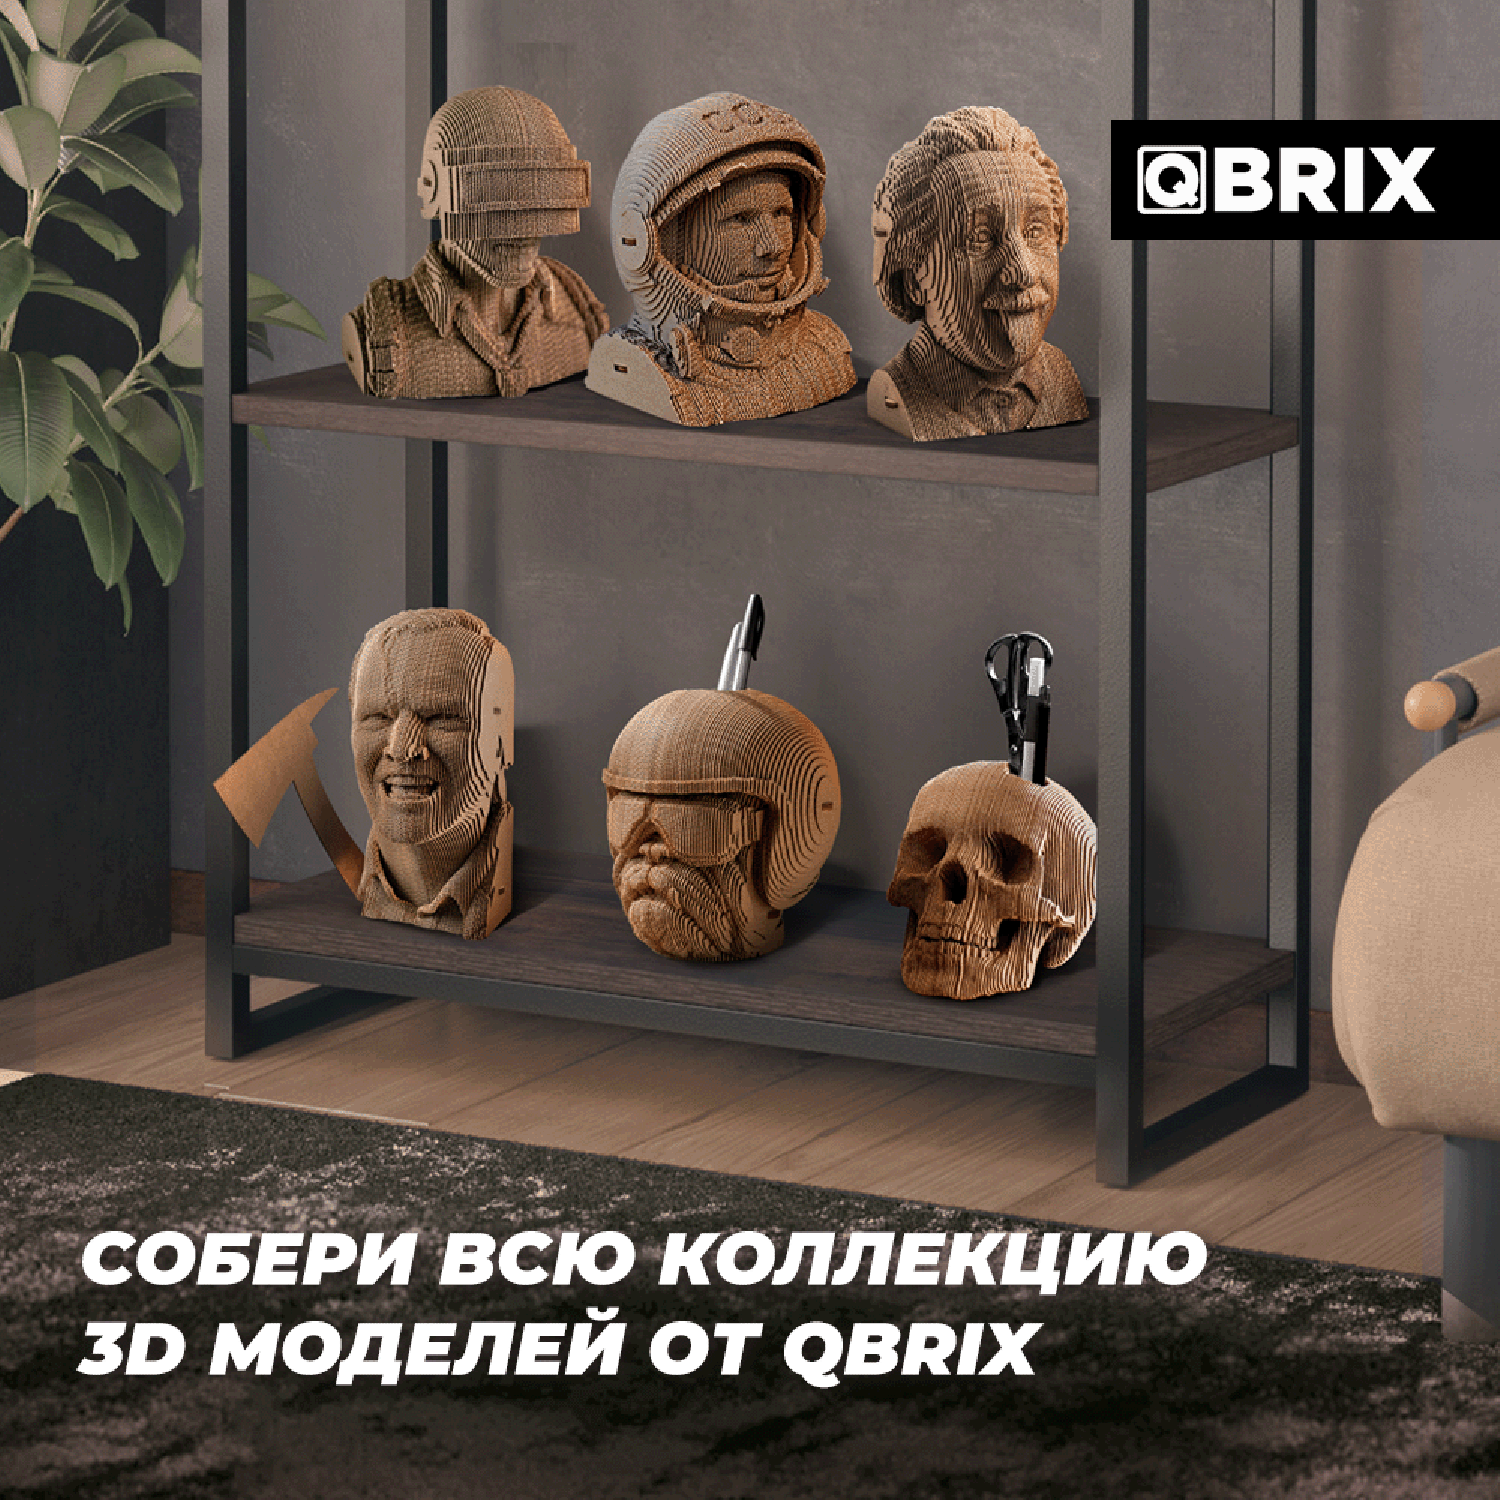 Конструктор QBRIX 3D картонный Александр Пушкин 20014 20014 - фото 9